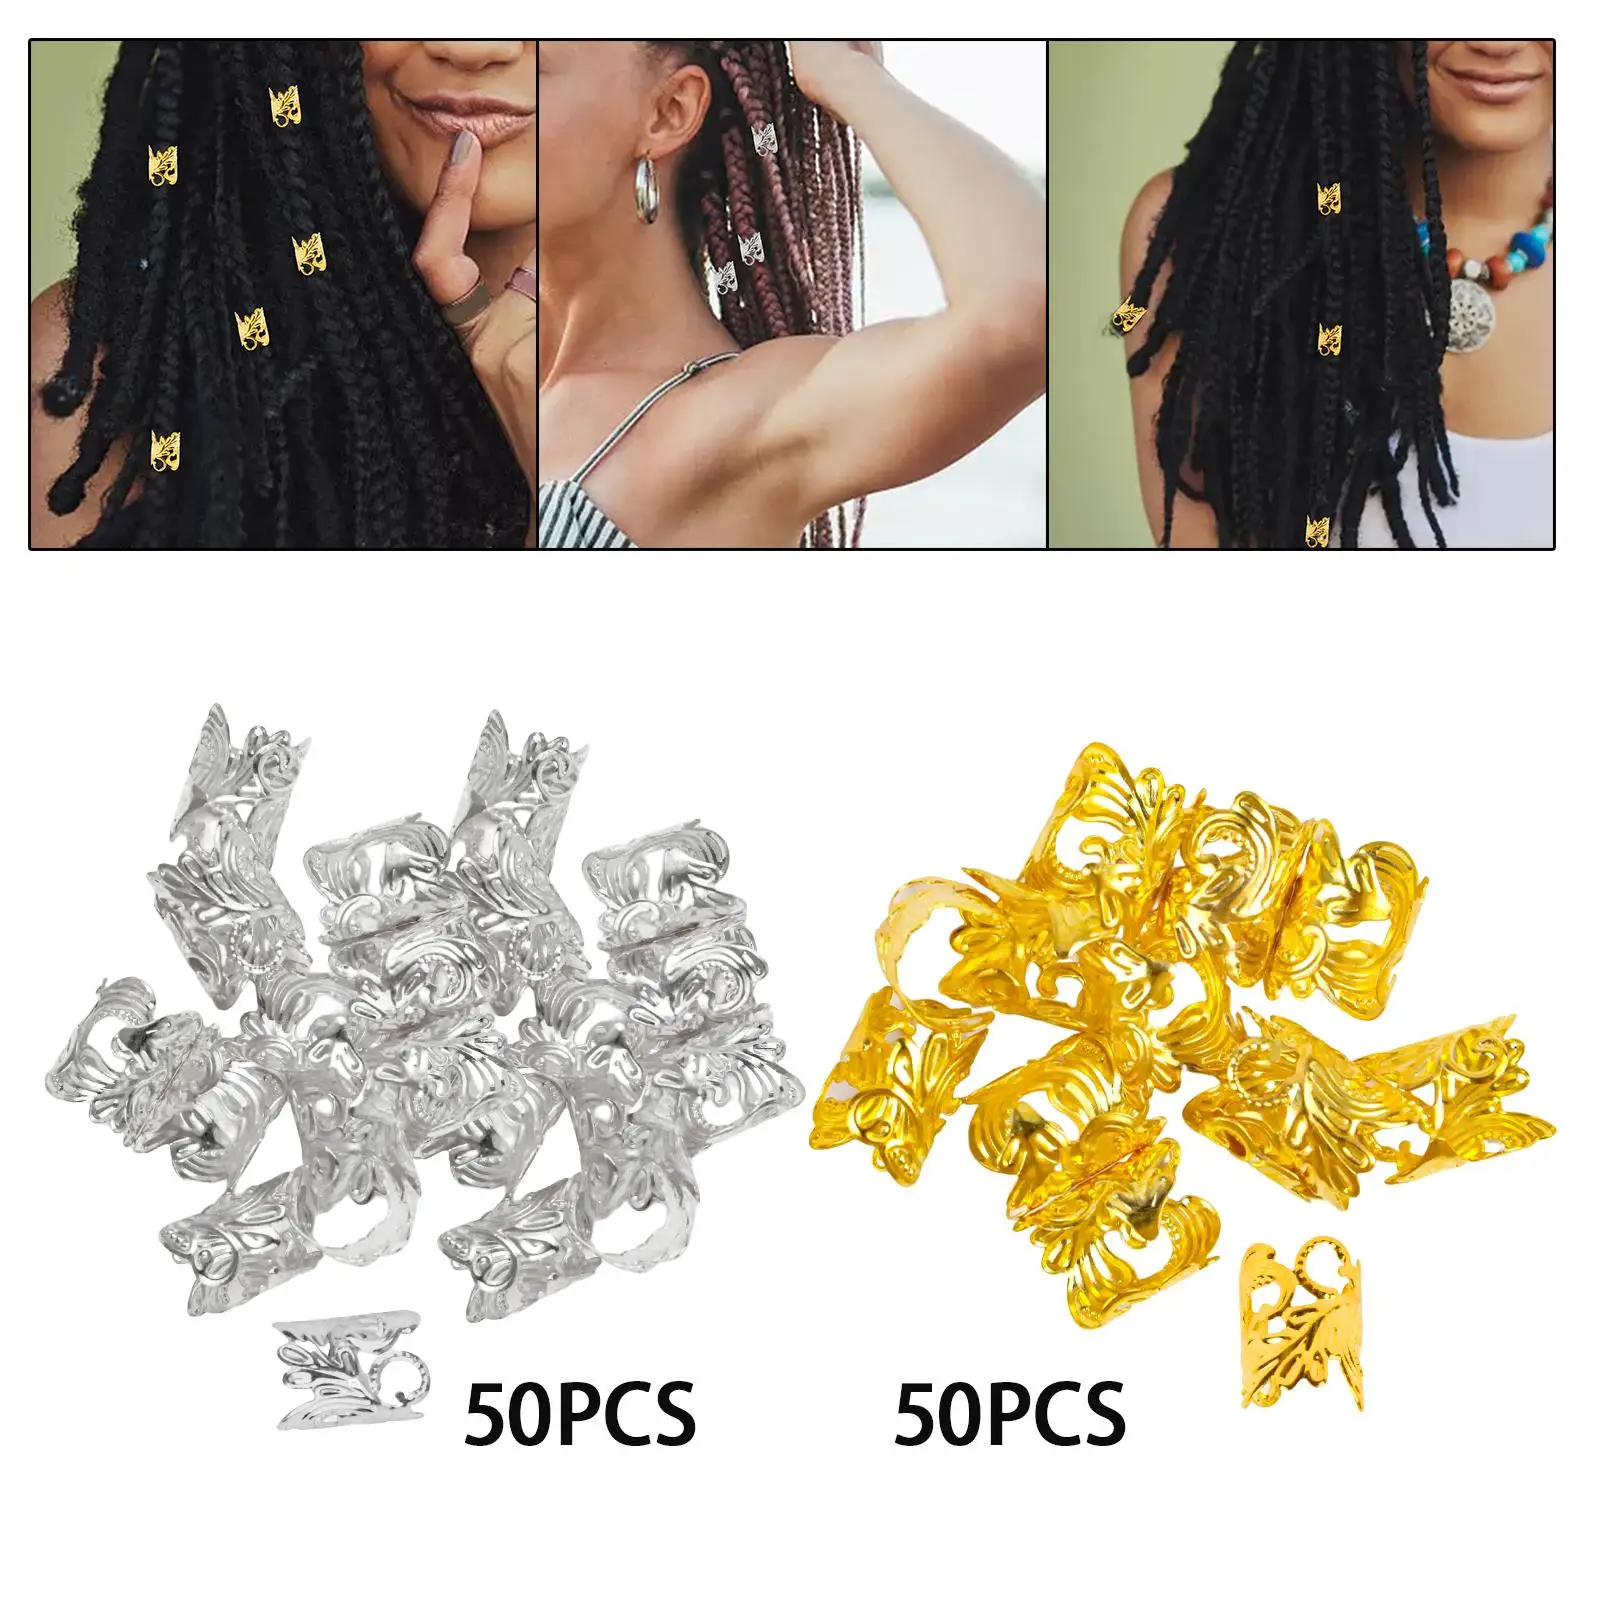 50Pcs Dreadlocks Beads Braids Ring Clips Beard Beads Adjustable for Pendants